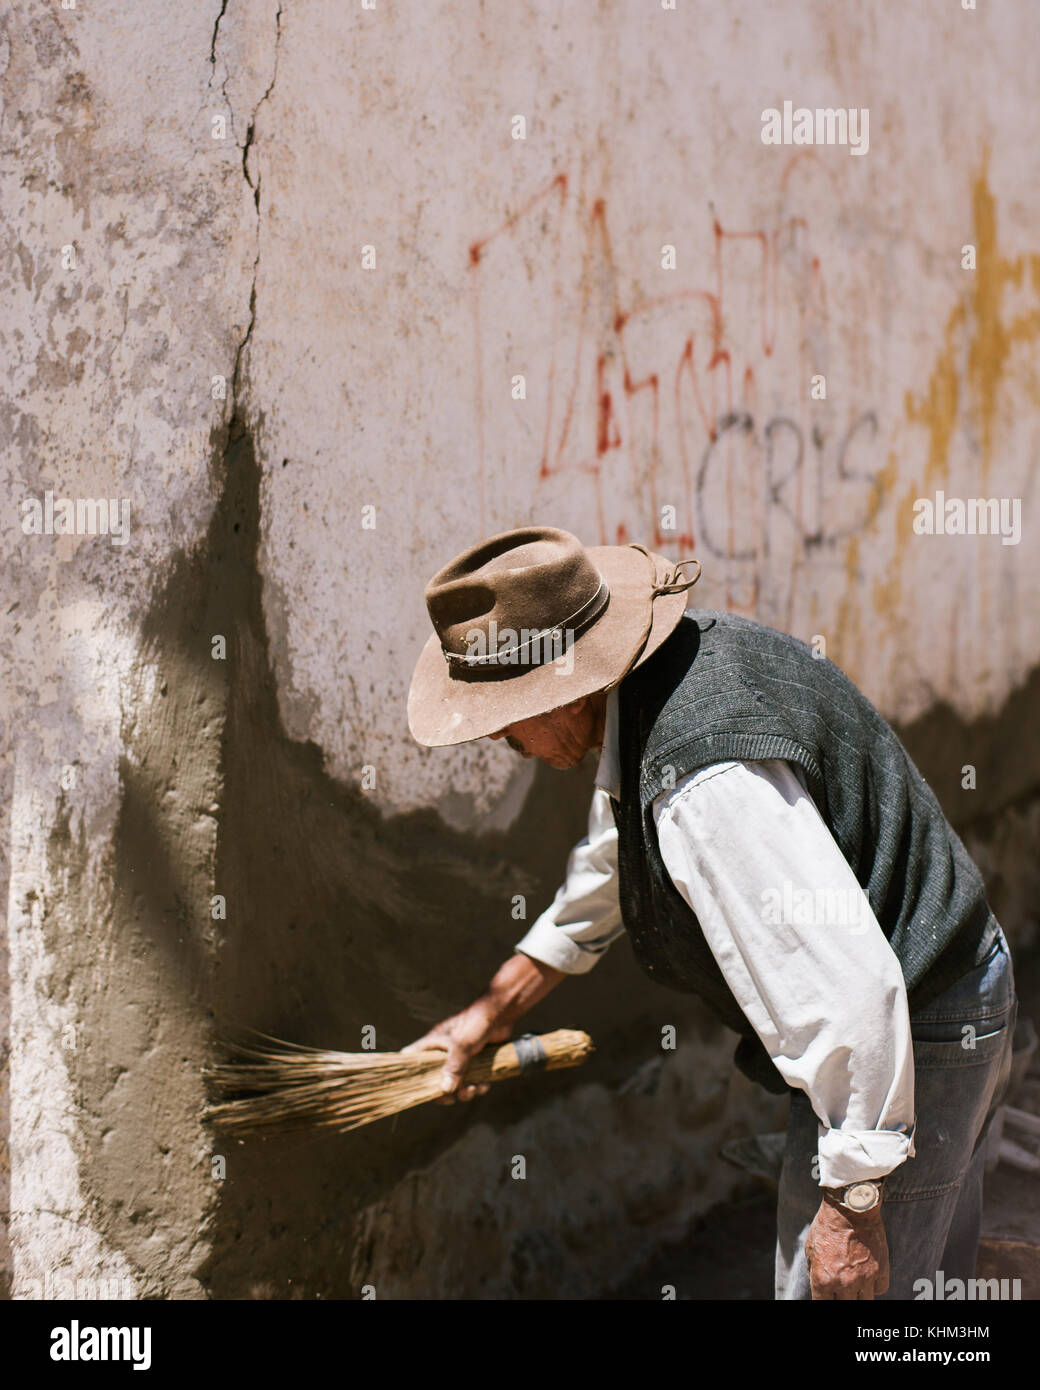 TARATA, COCHABAMBA, BOLIVIA S.A. - OCTOBER 2017: A man patches up concrete on a building in colonial Tarata, Bolivia. Stock Photo